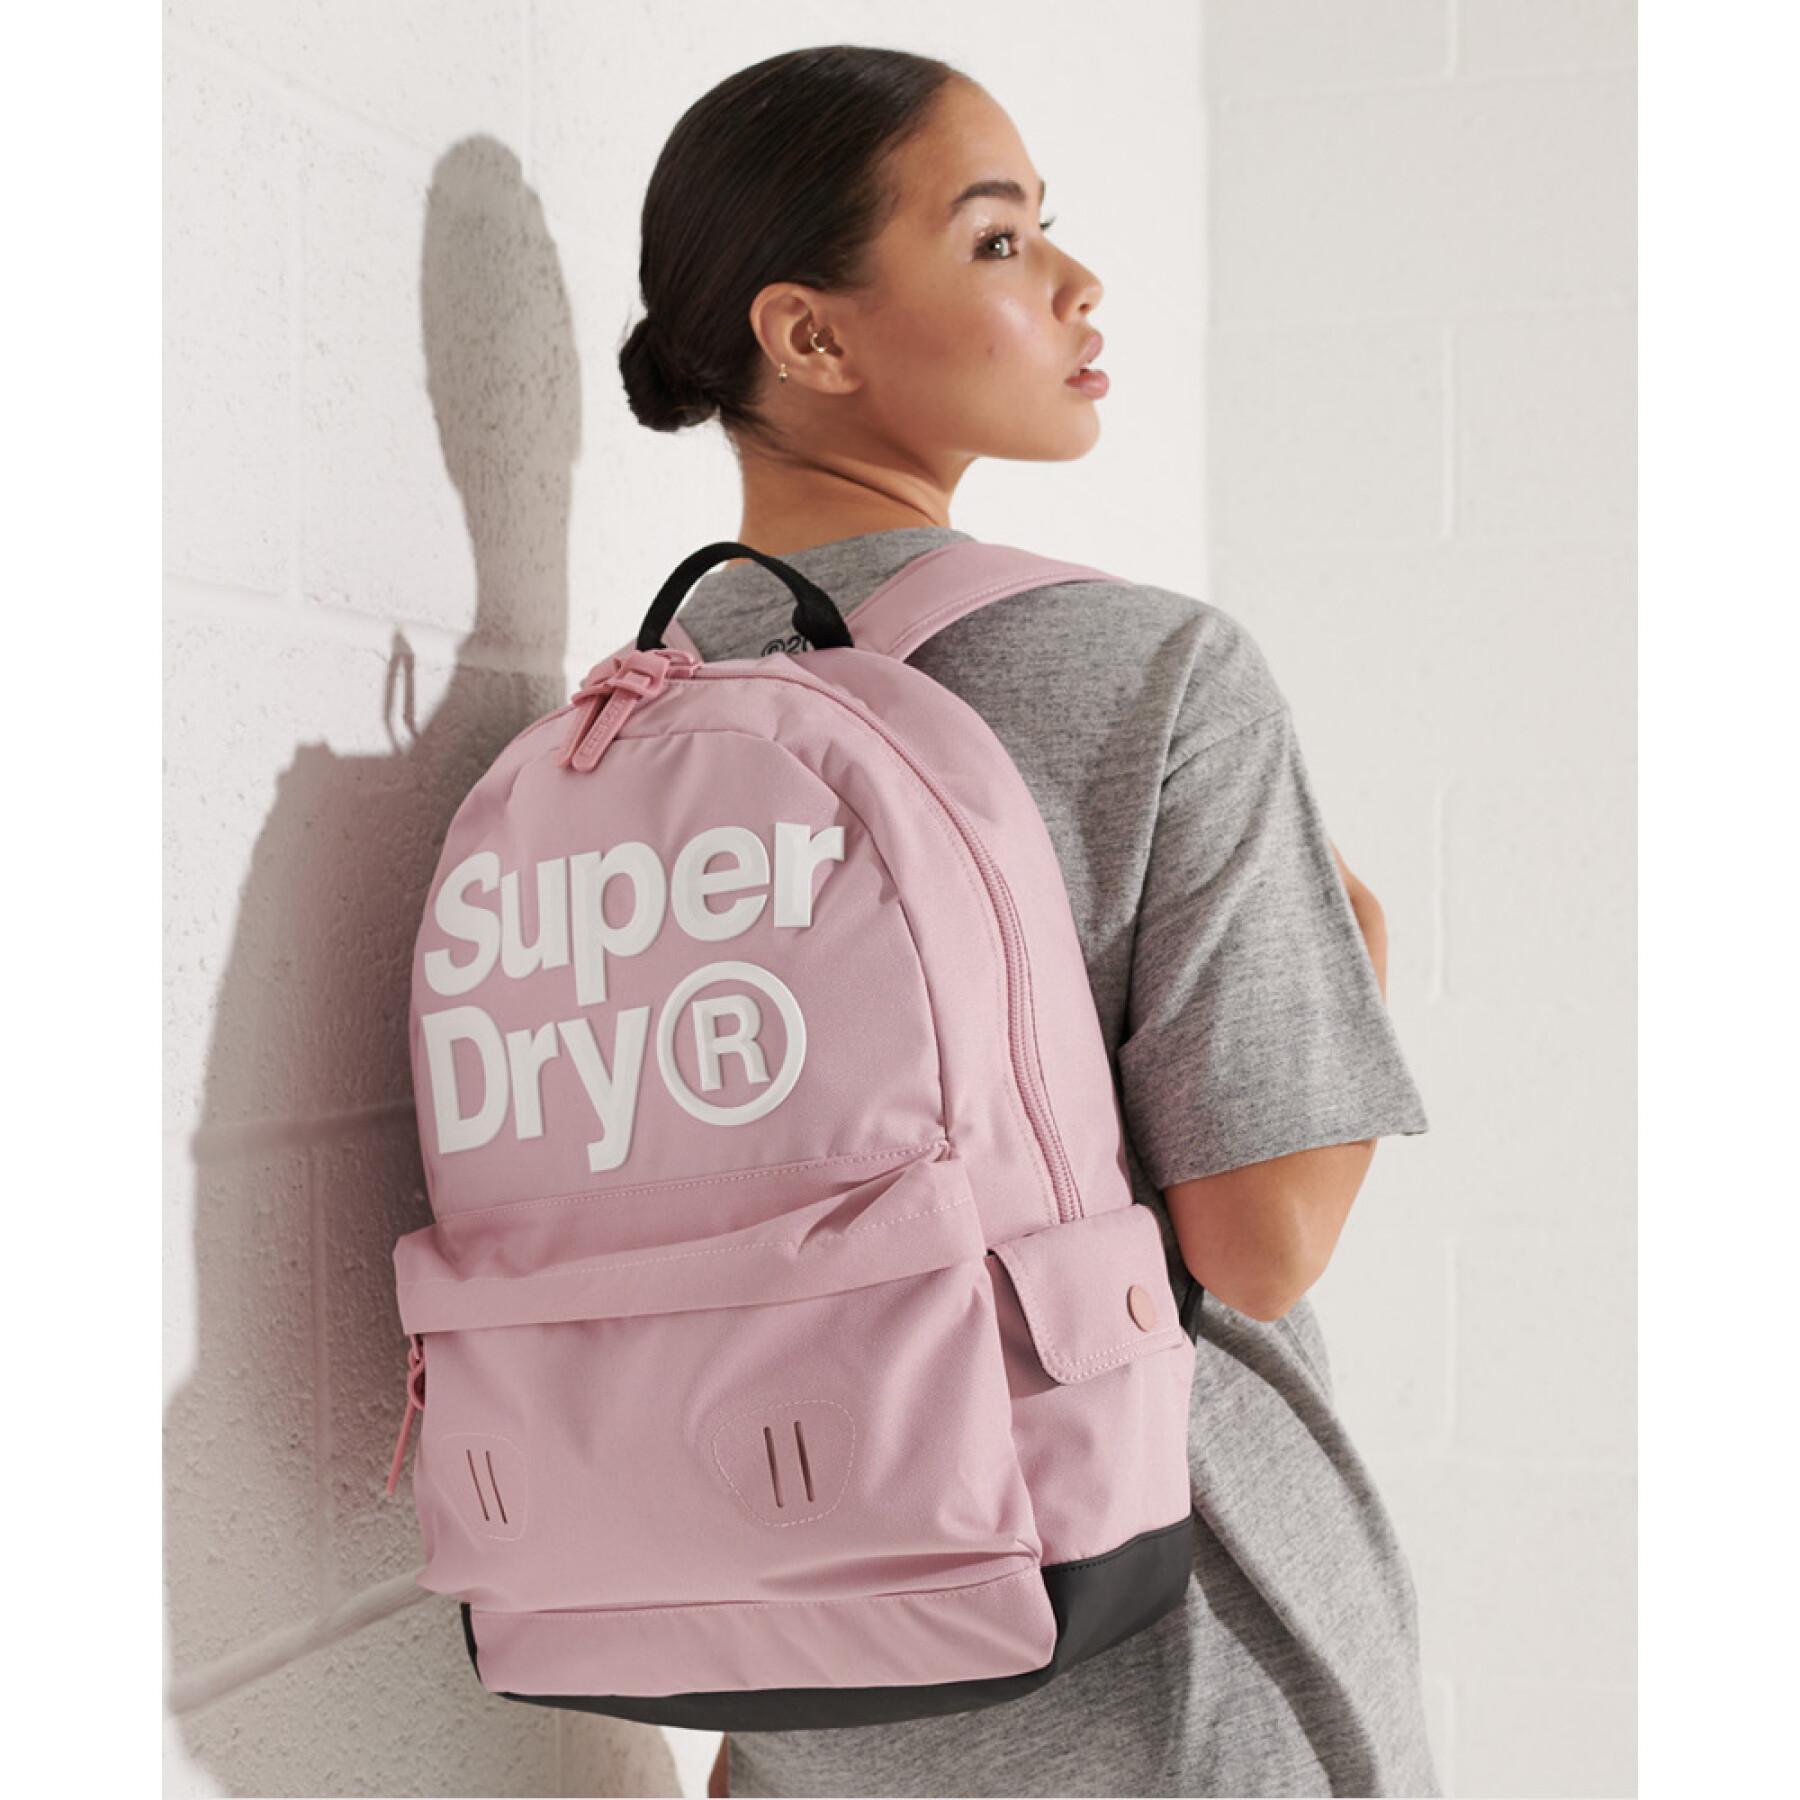 Women's backpack Superdry Edge Montana